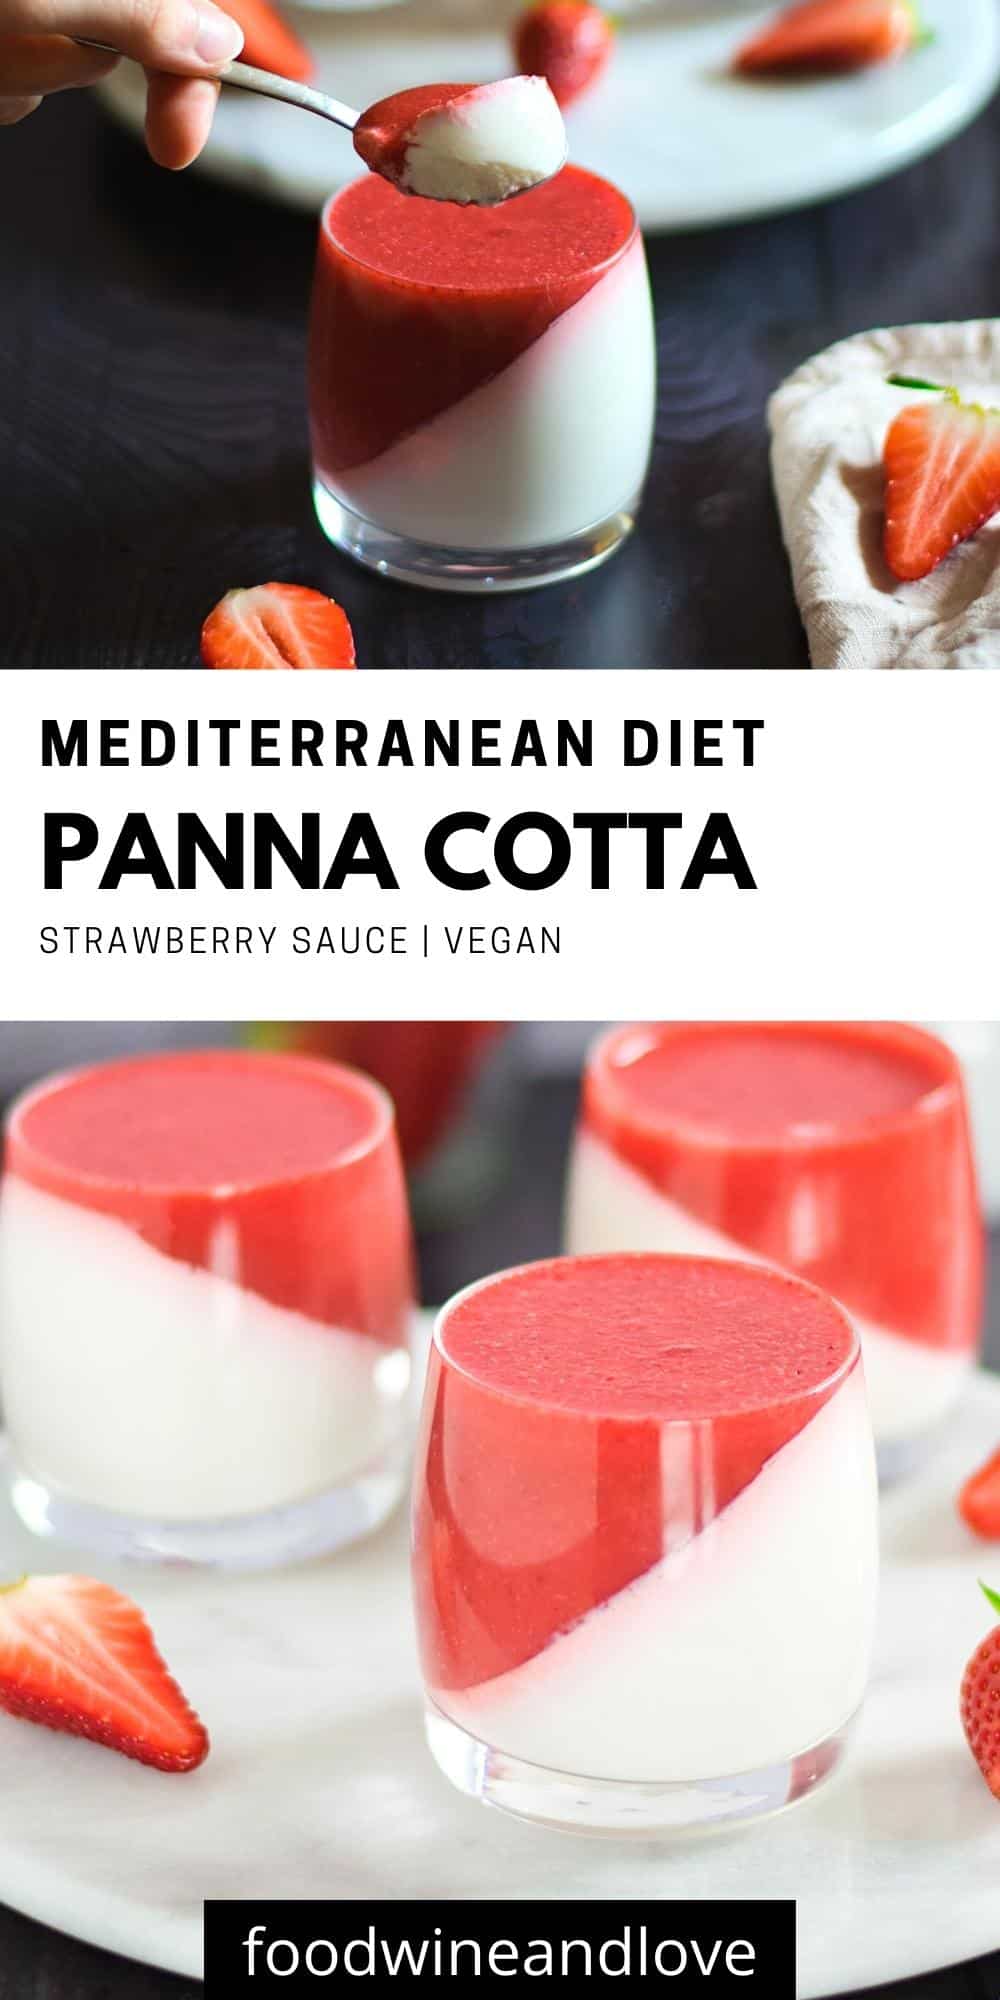 Panna Cotta in Strawberry Sauce